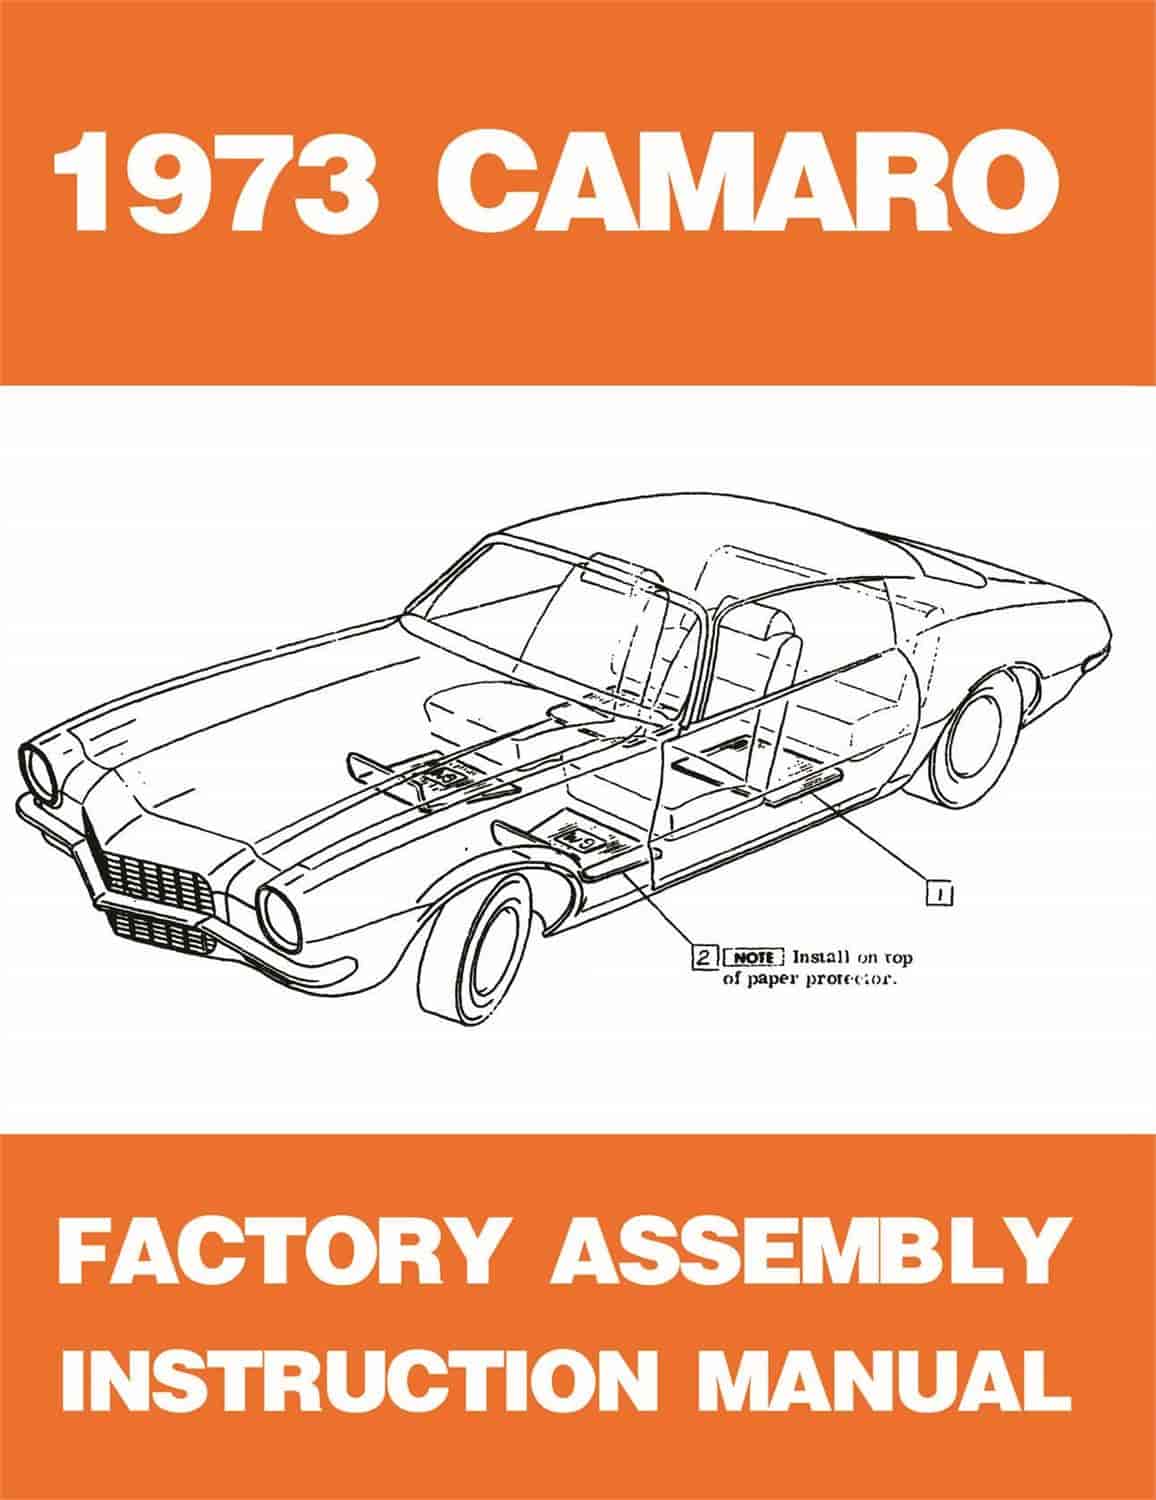 Factory Assembly Manual 1973 Chevy Camaro